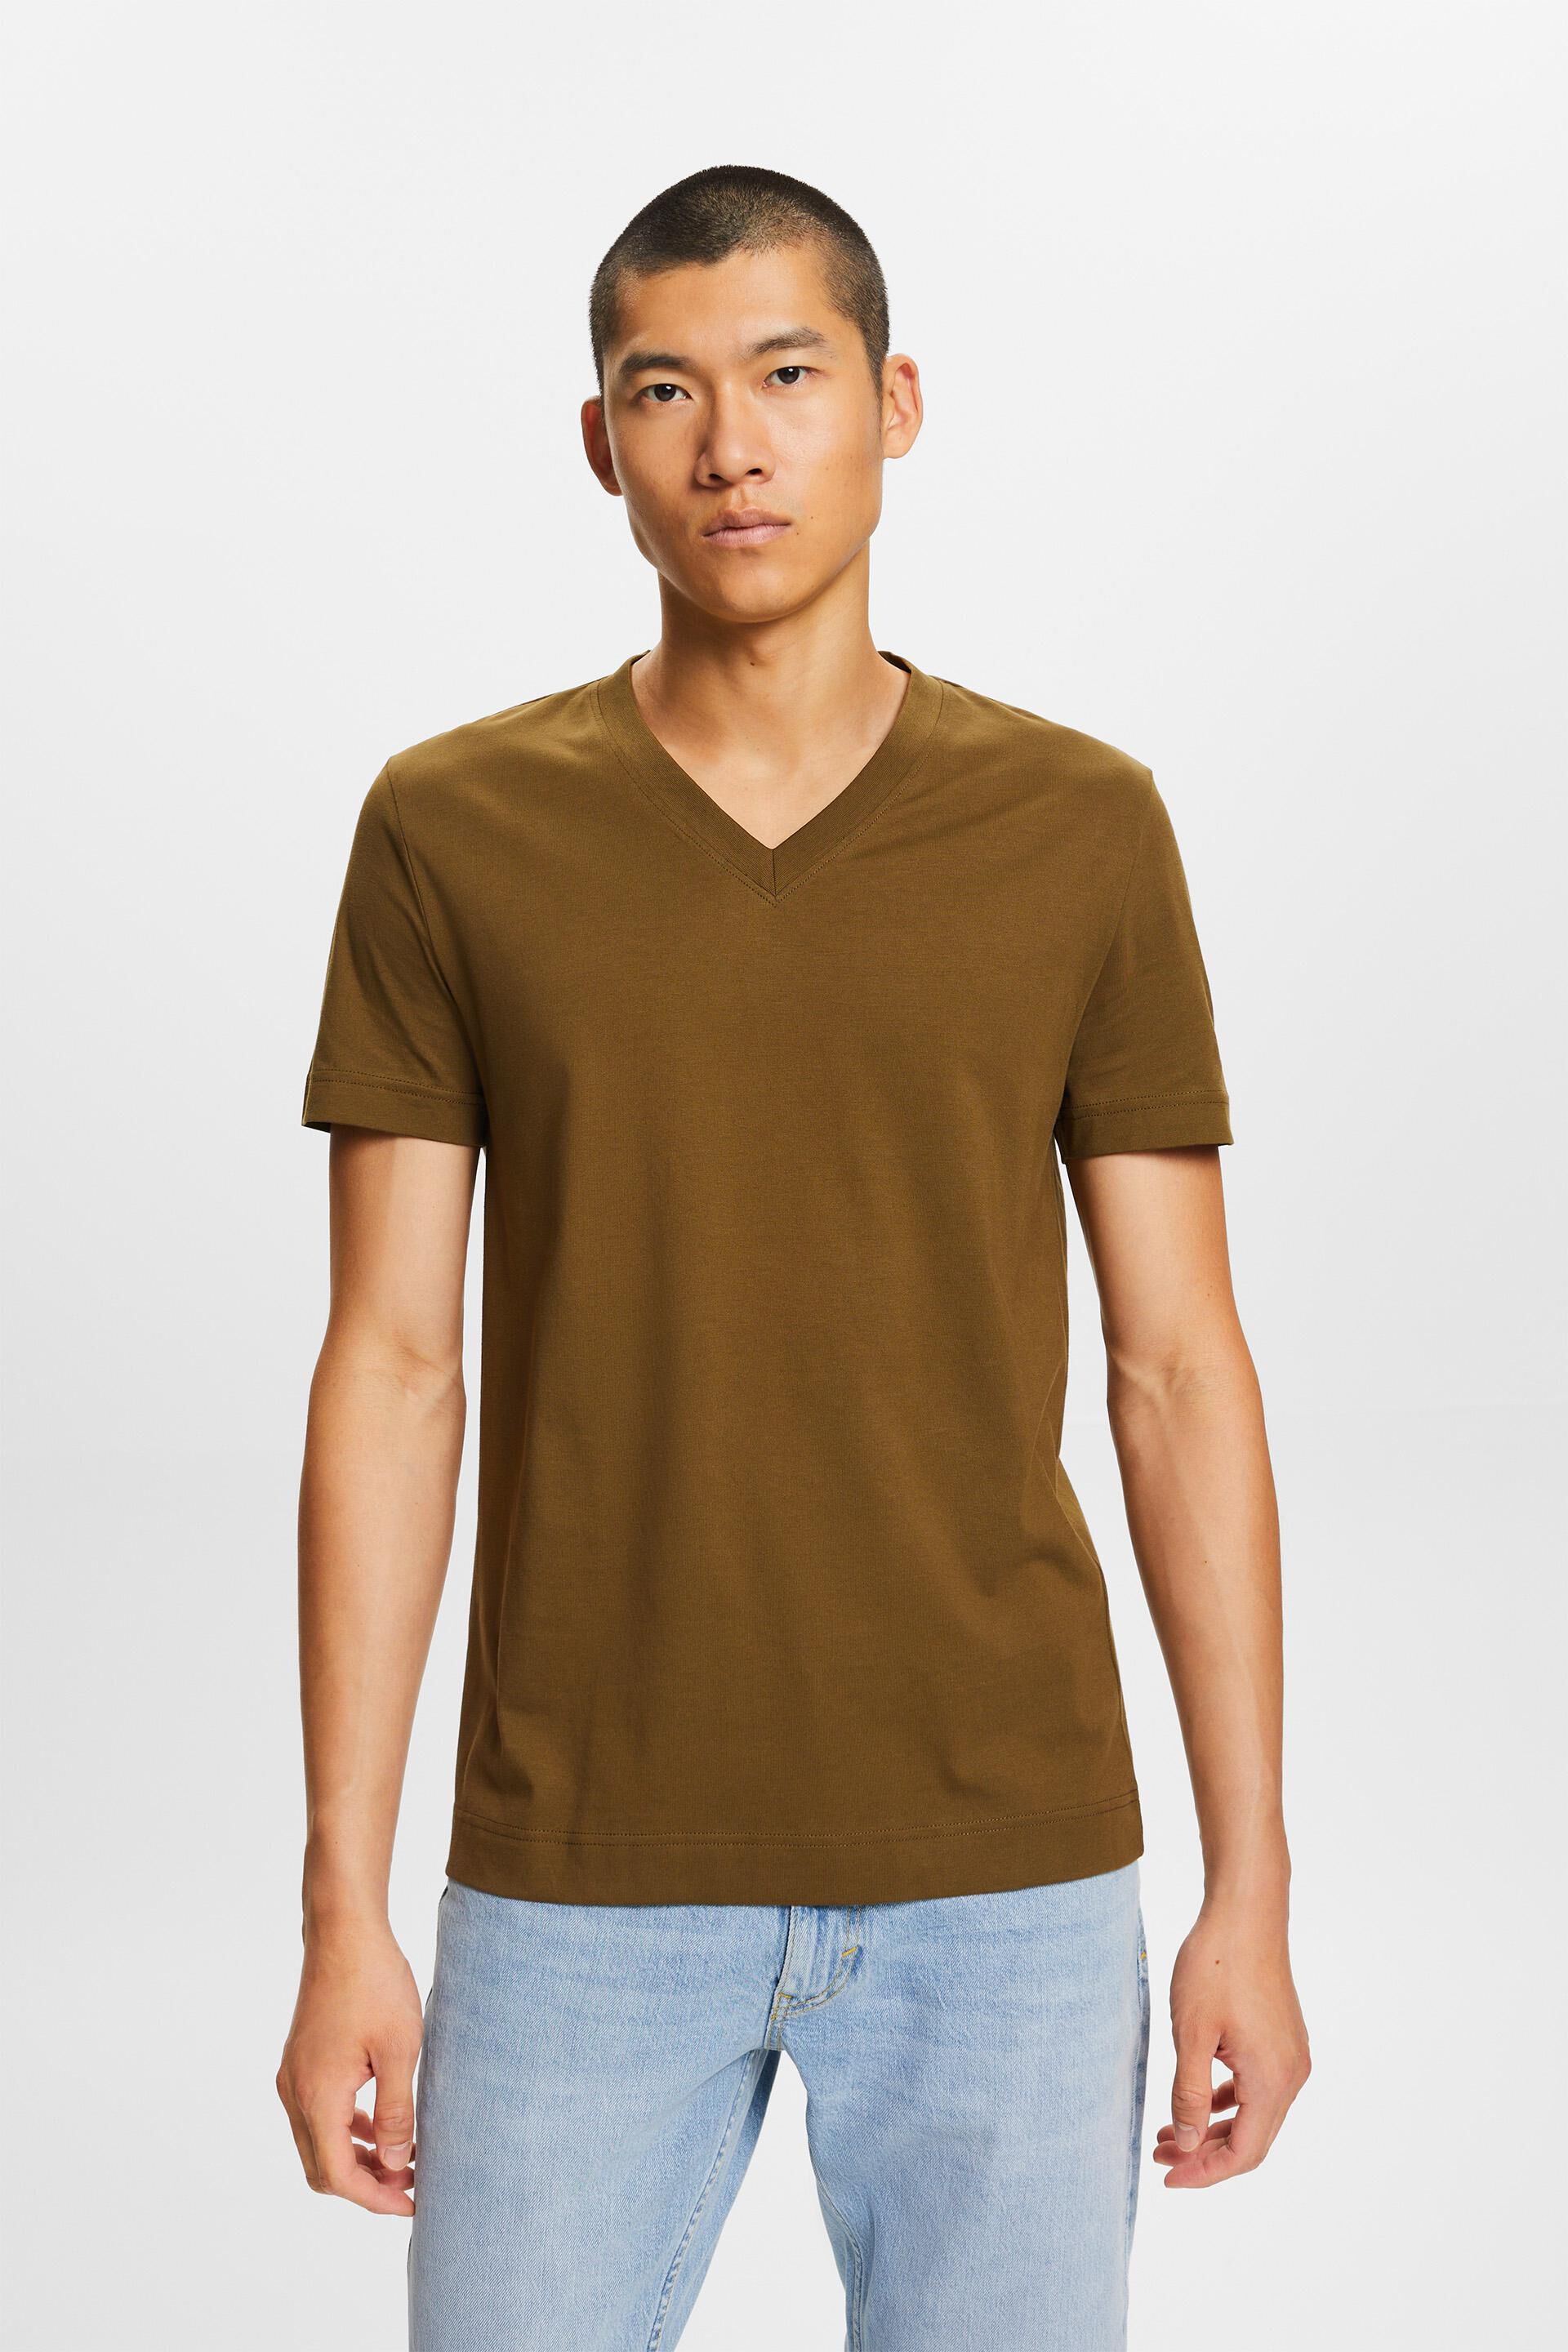 Esprit cotton V-neck Jersey t-shirt, 100%